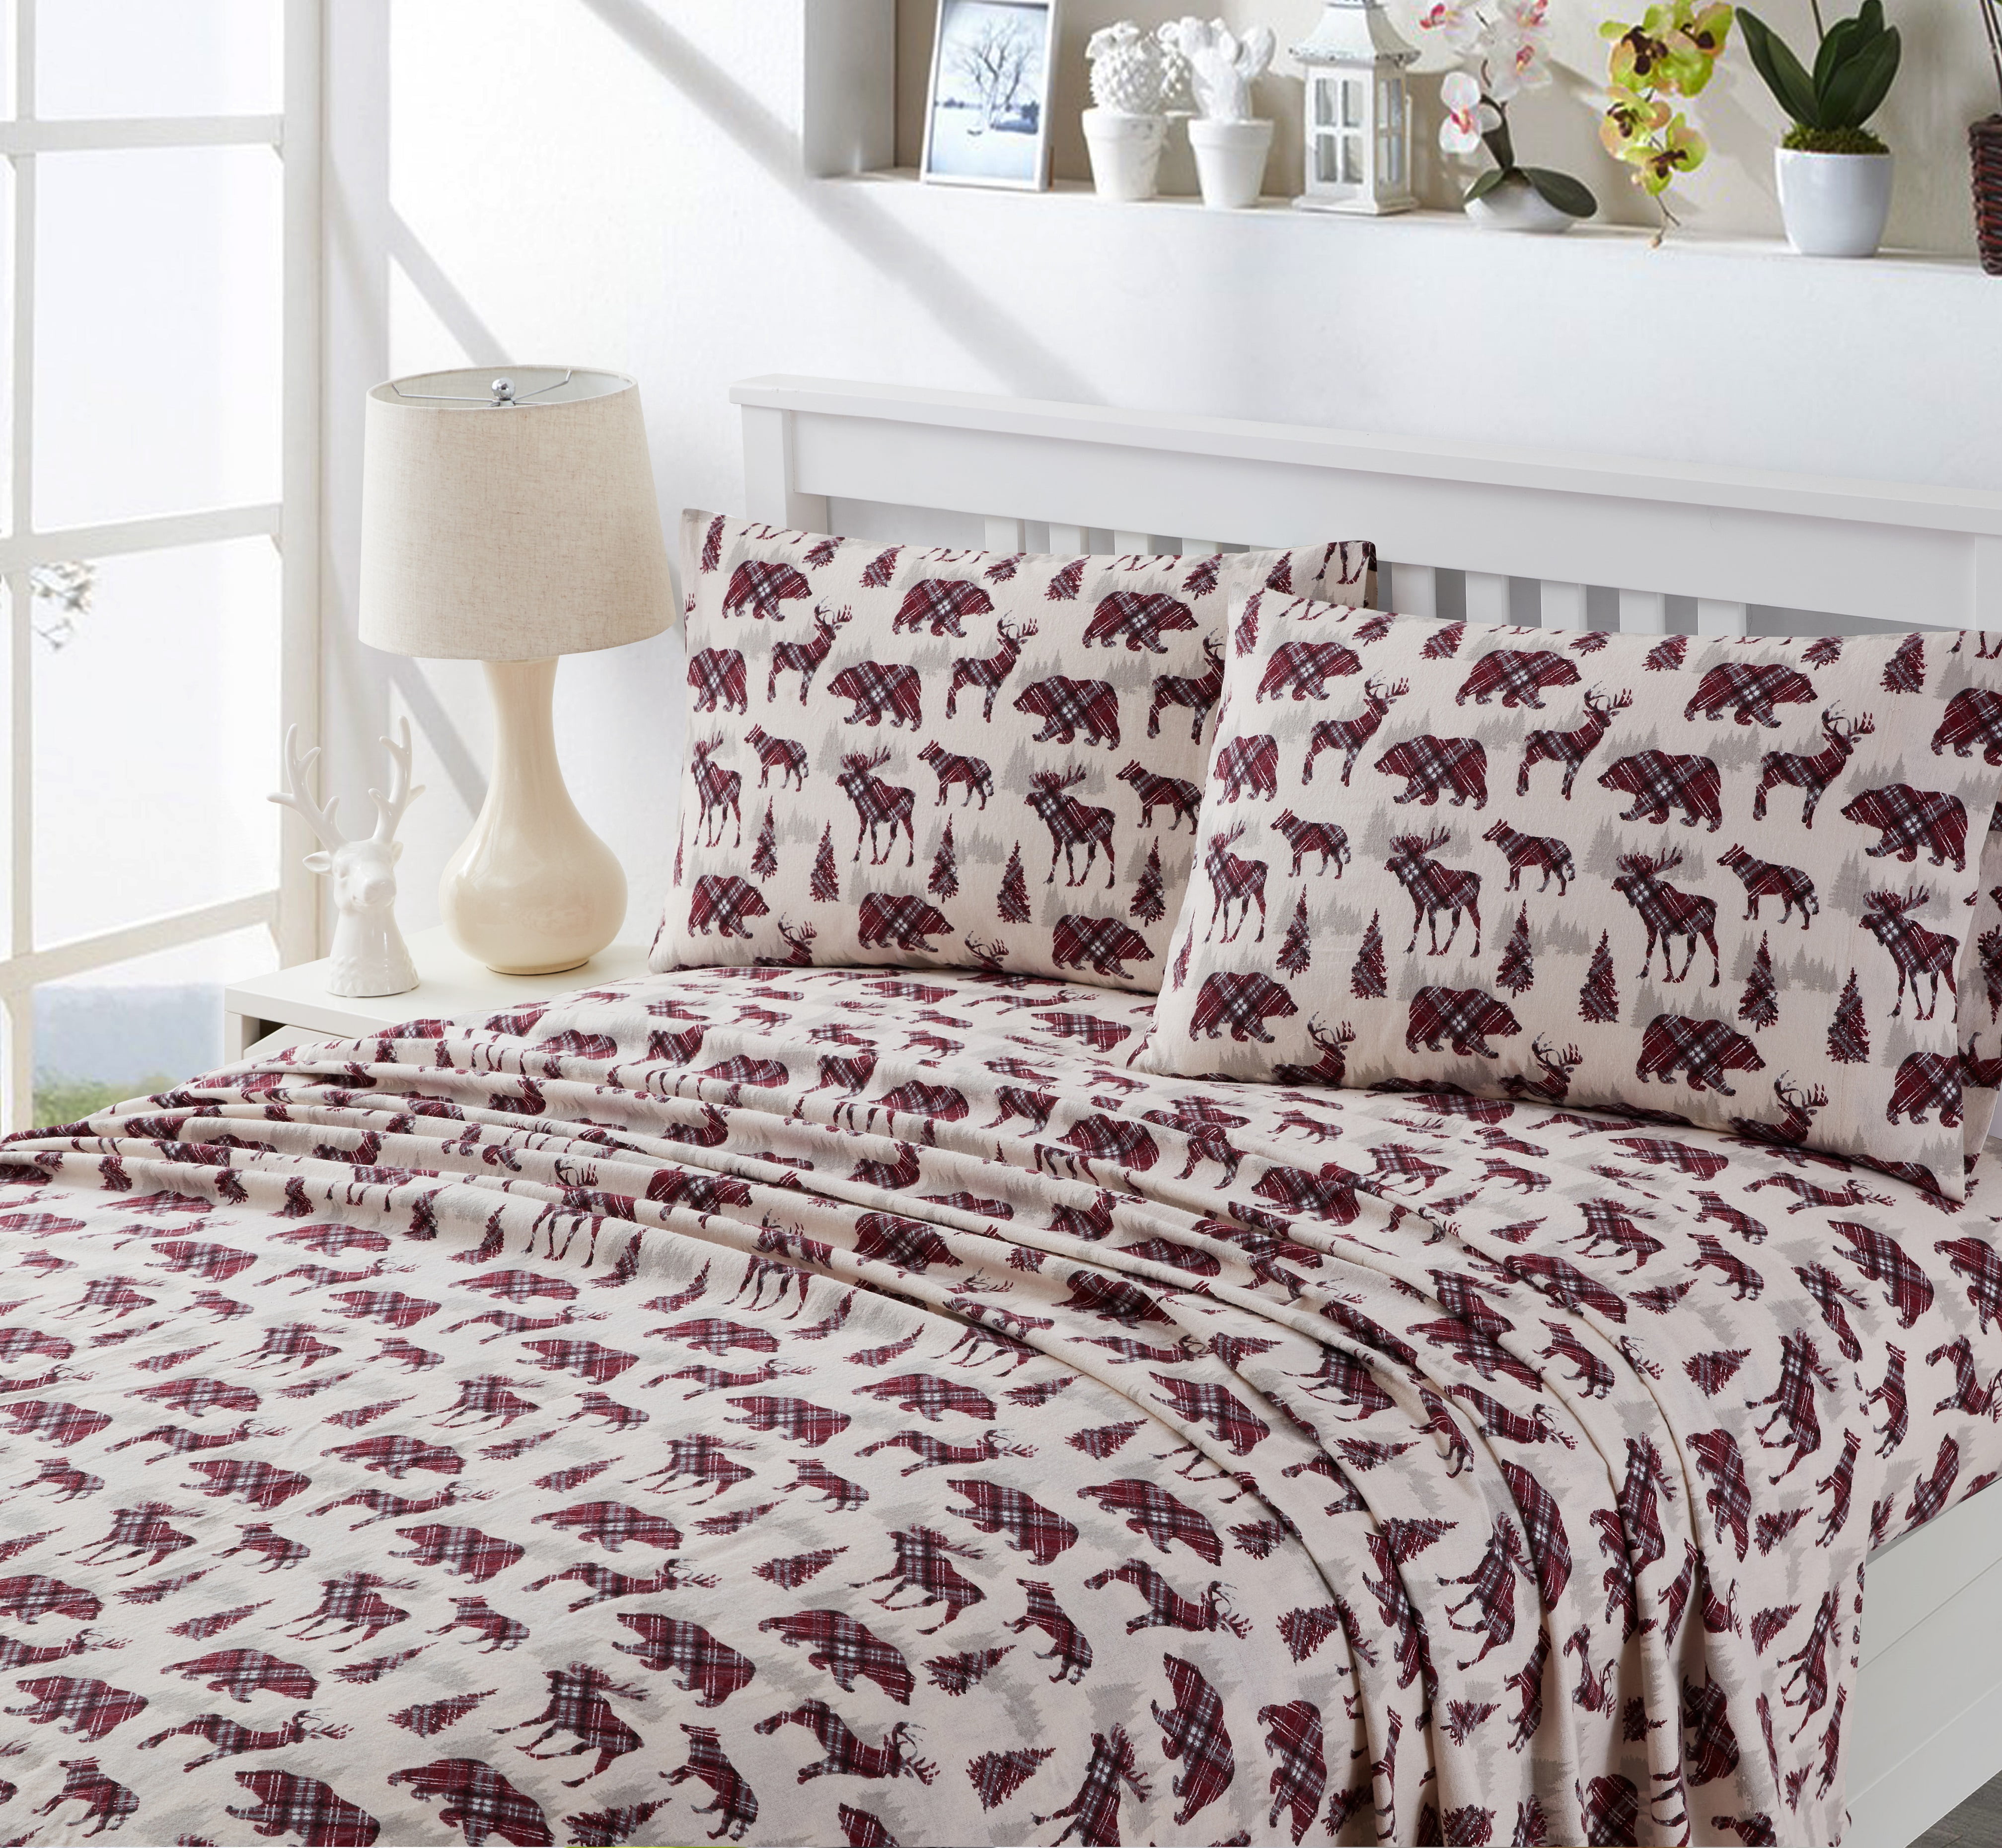 Disney STAR WARS Twin Bedding Set Sheet 100% Turkish Cotton High Quality 